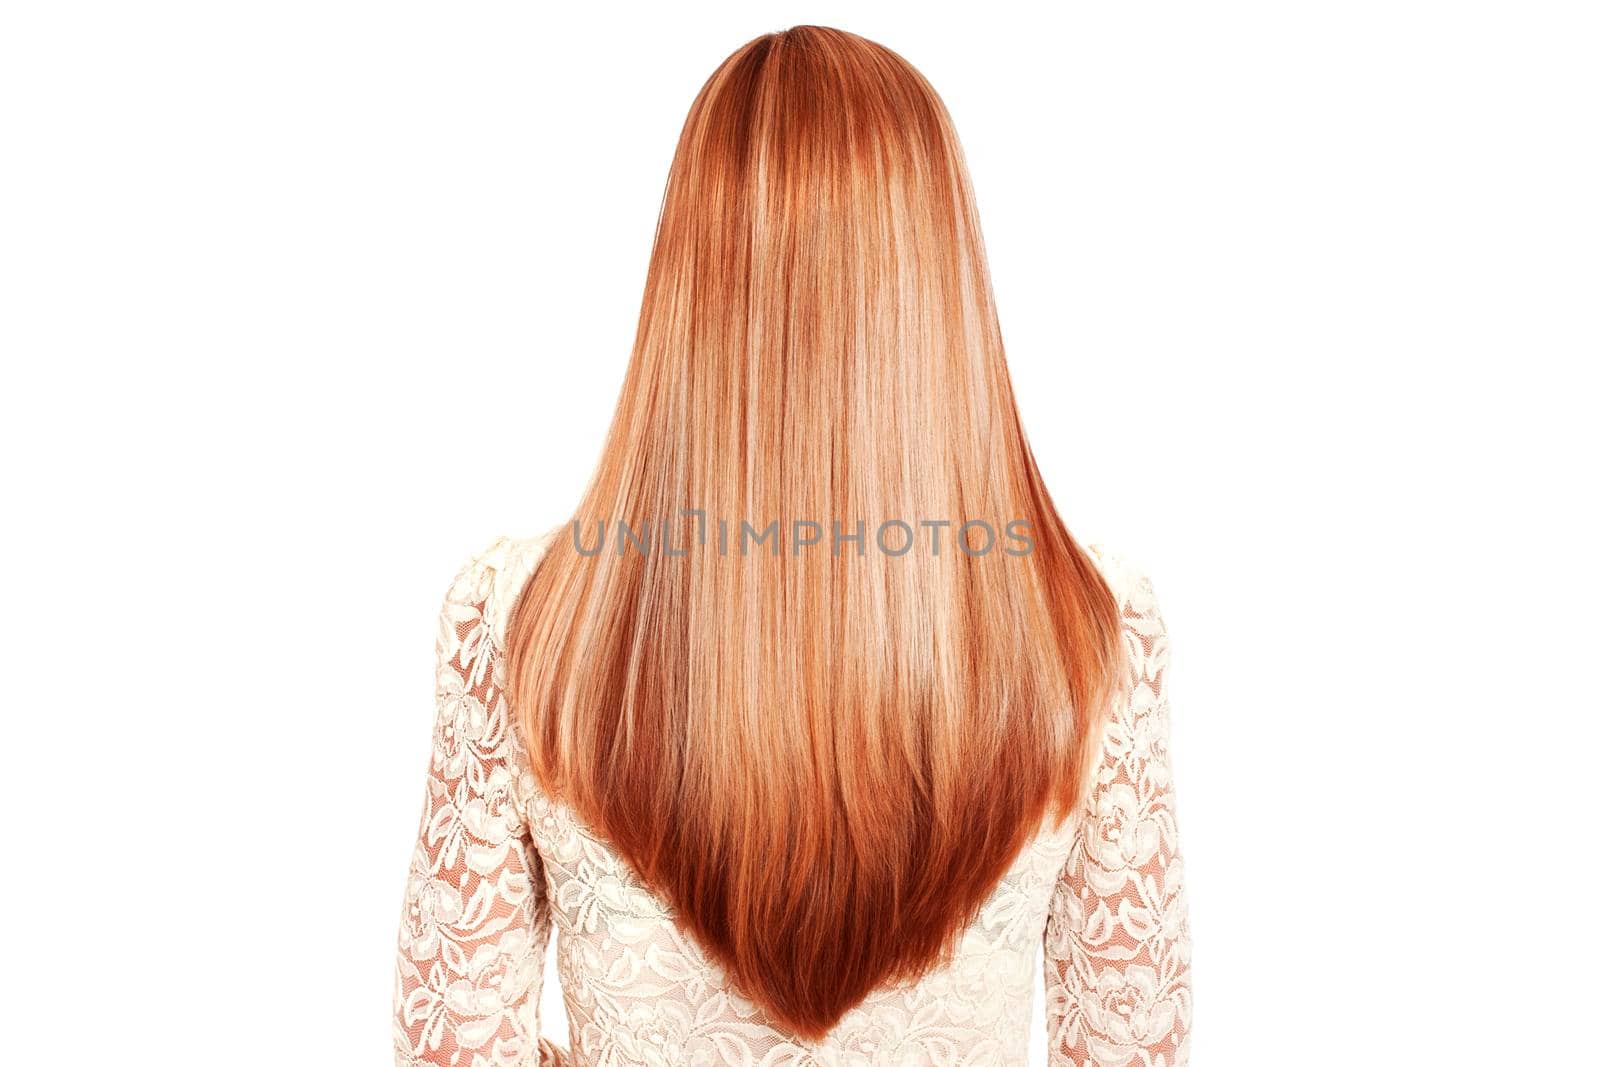 Blonde, redhead, long hair- Stock Image by Jyliana